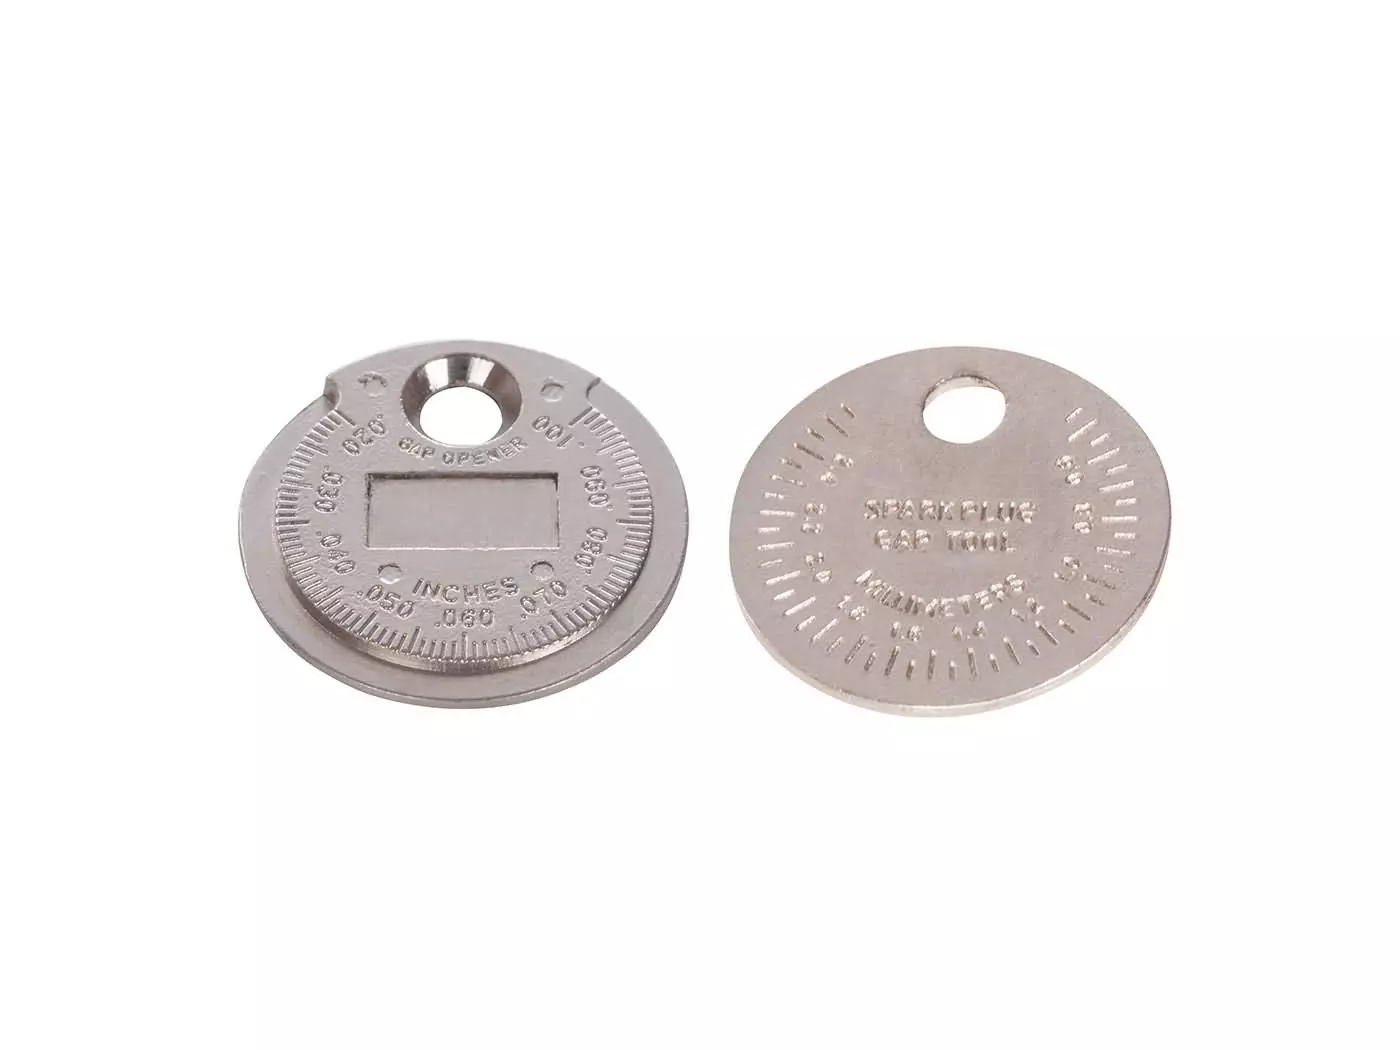 Elektroden afstandmeter 0,5-2,55mm